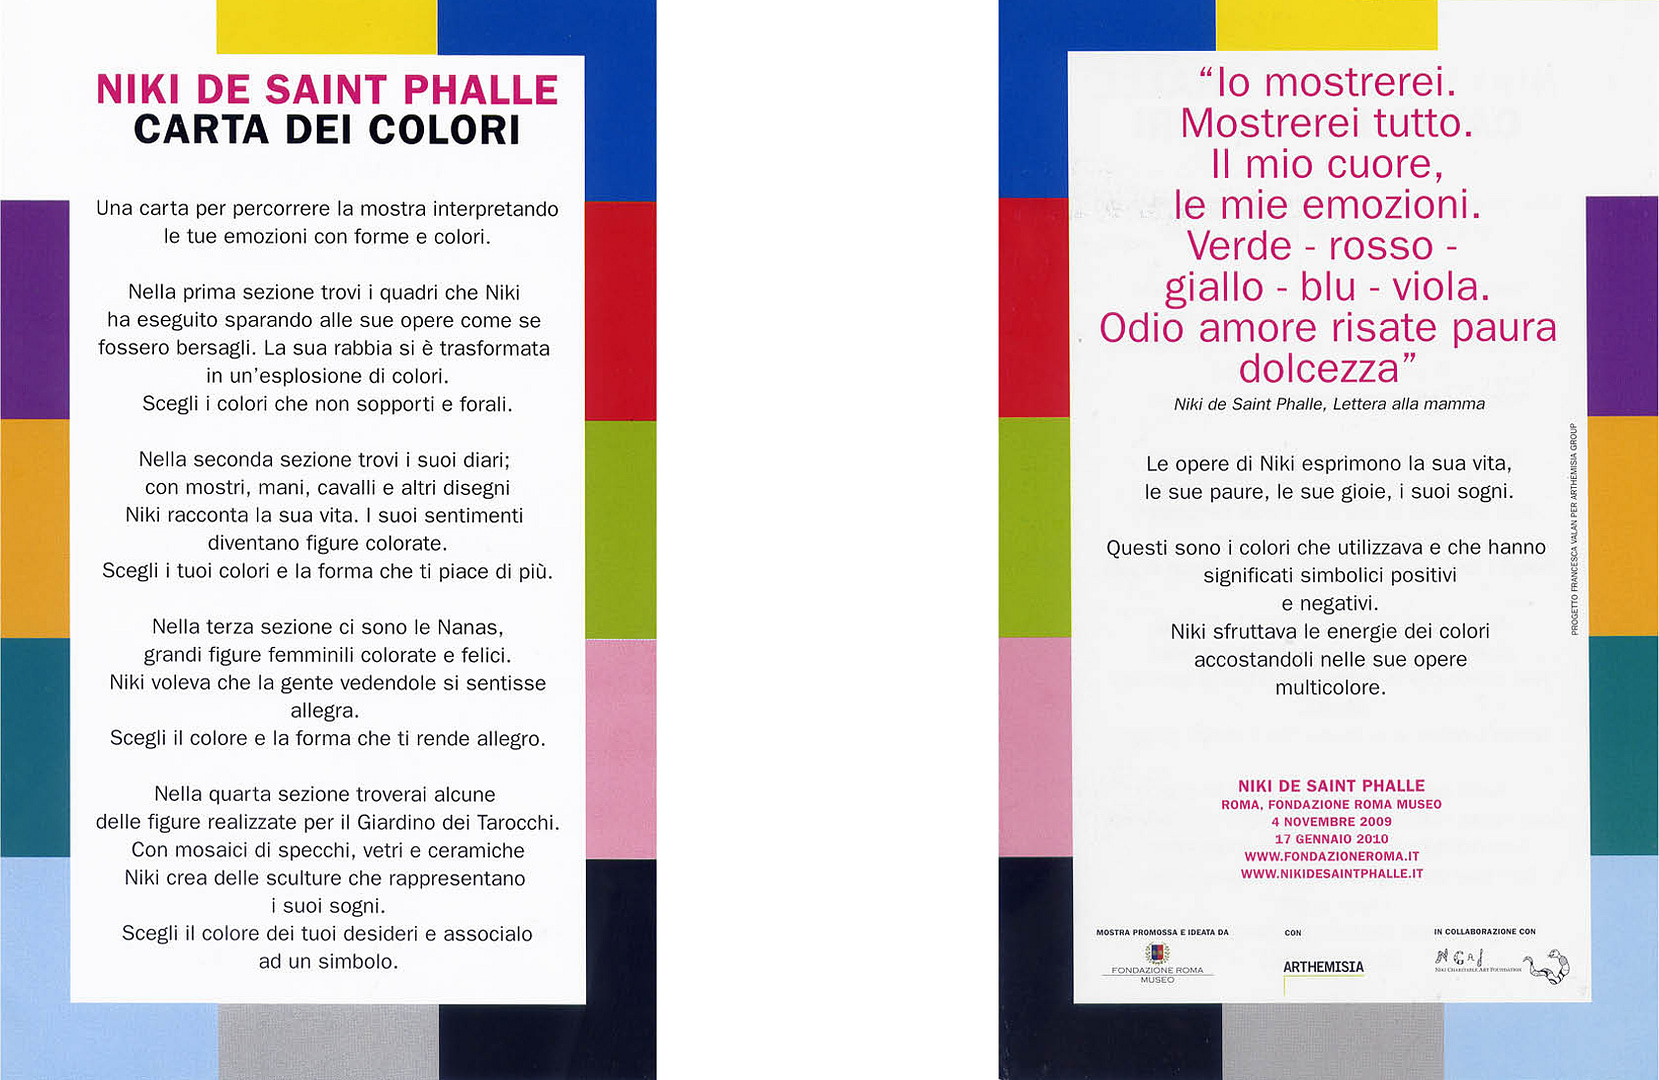 Color lab Fondazione Roma Museo Niki de Saint Phalle